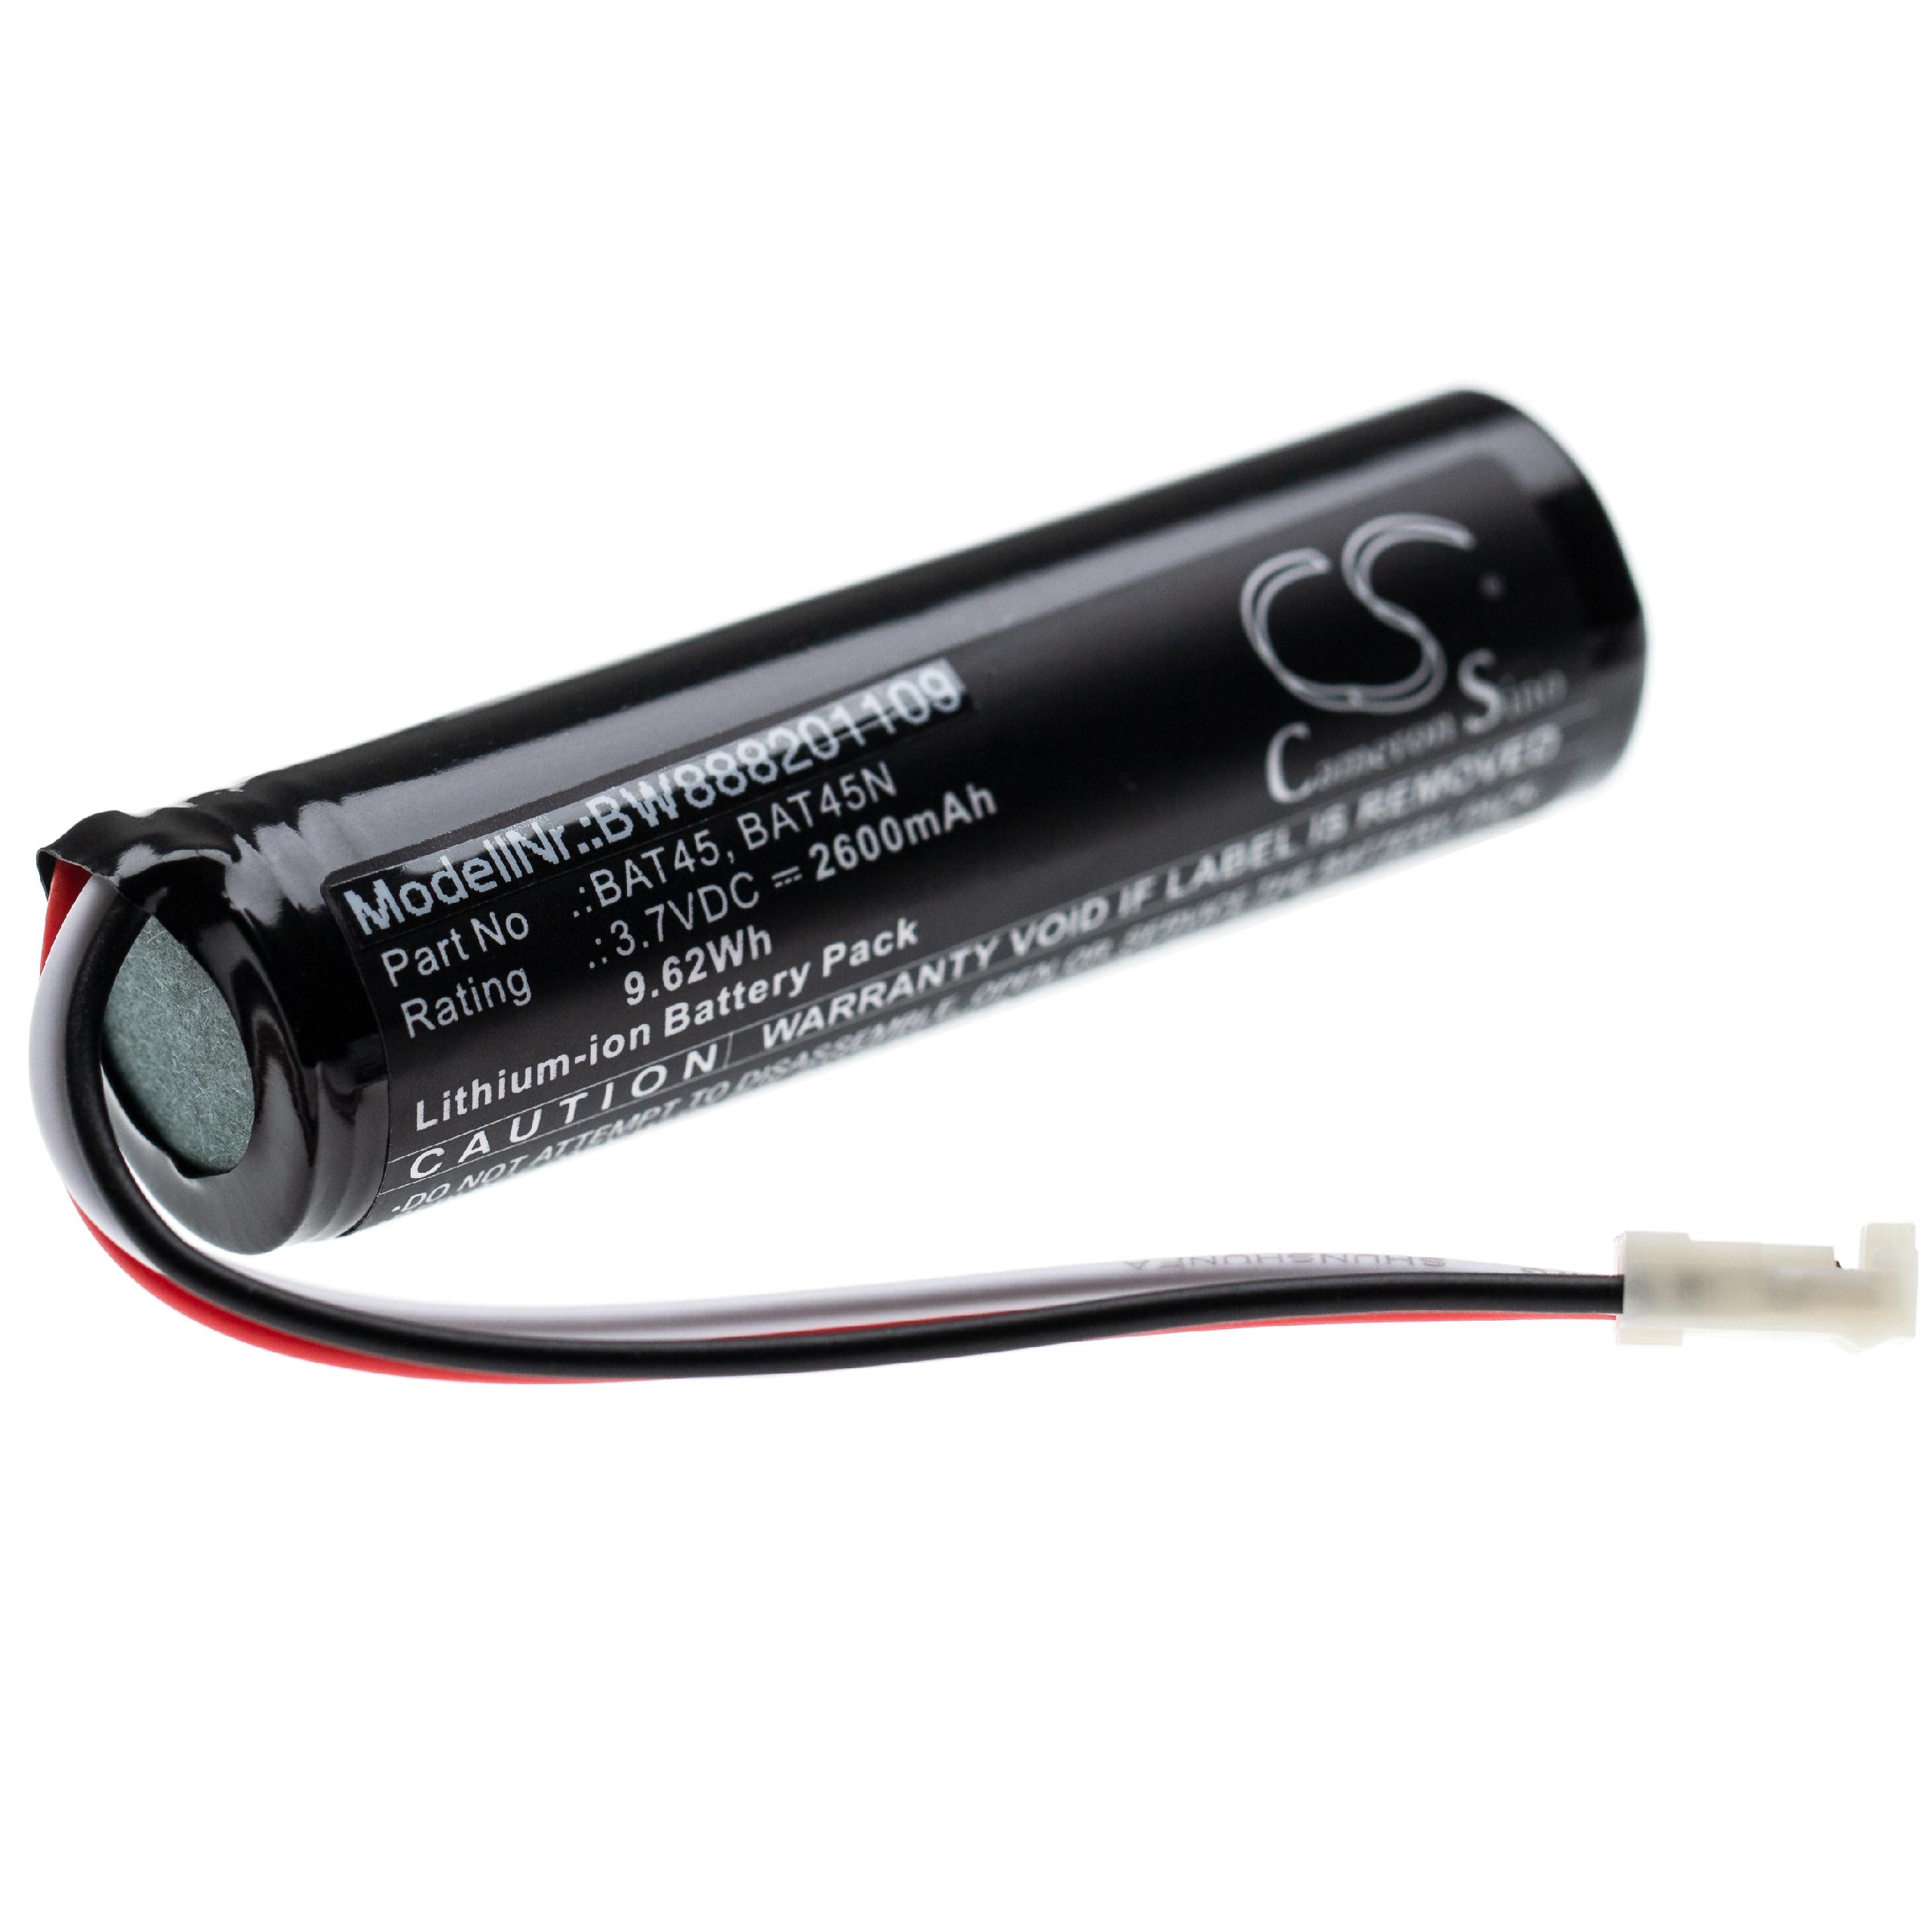 Laser Battery Replacement for HT Instruments BAT45, BAT45N, YABA0003HT1 - 2600mAh 3.7V Li-Ion